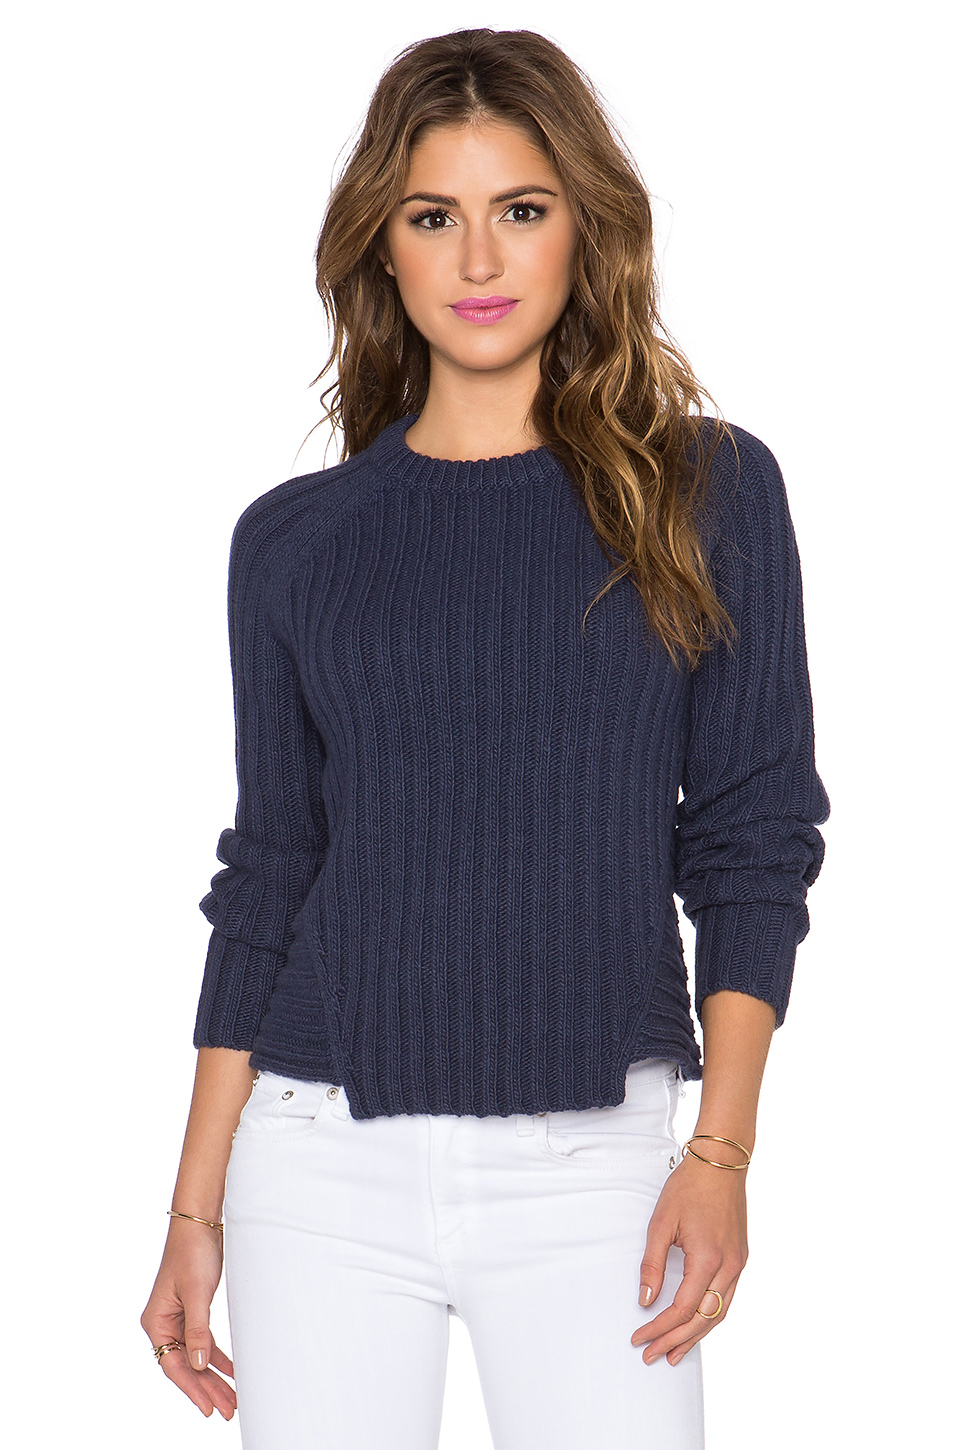 Lyst - Maison Scotch Color Block Sweater in Blue